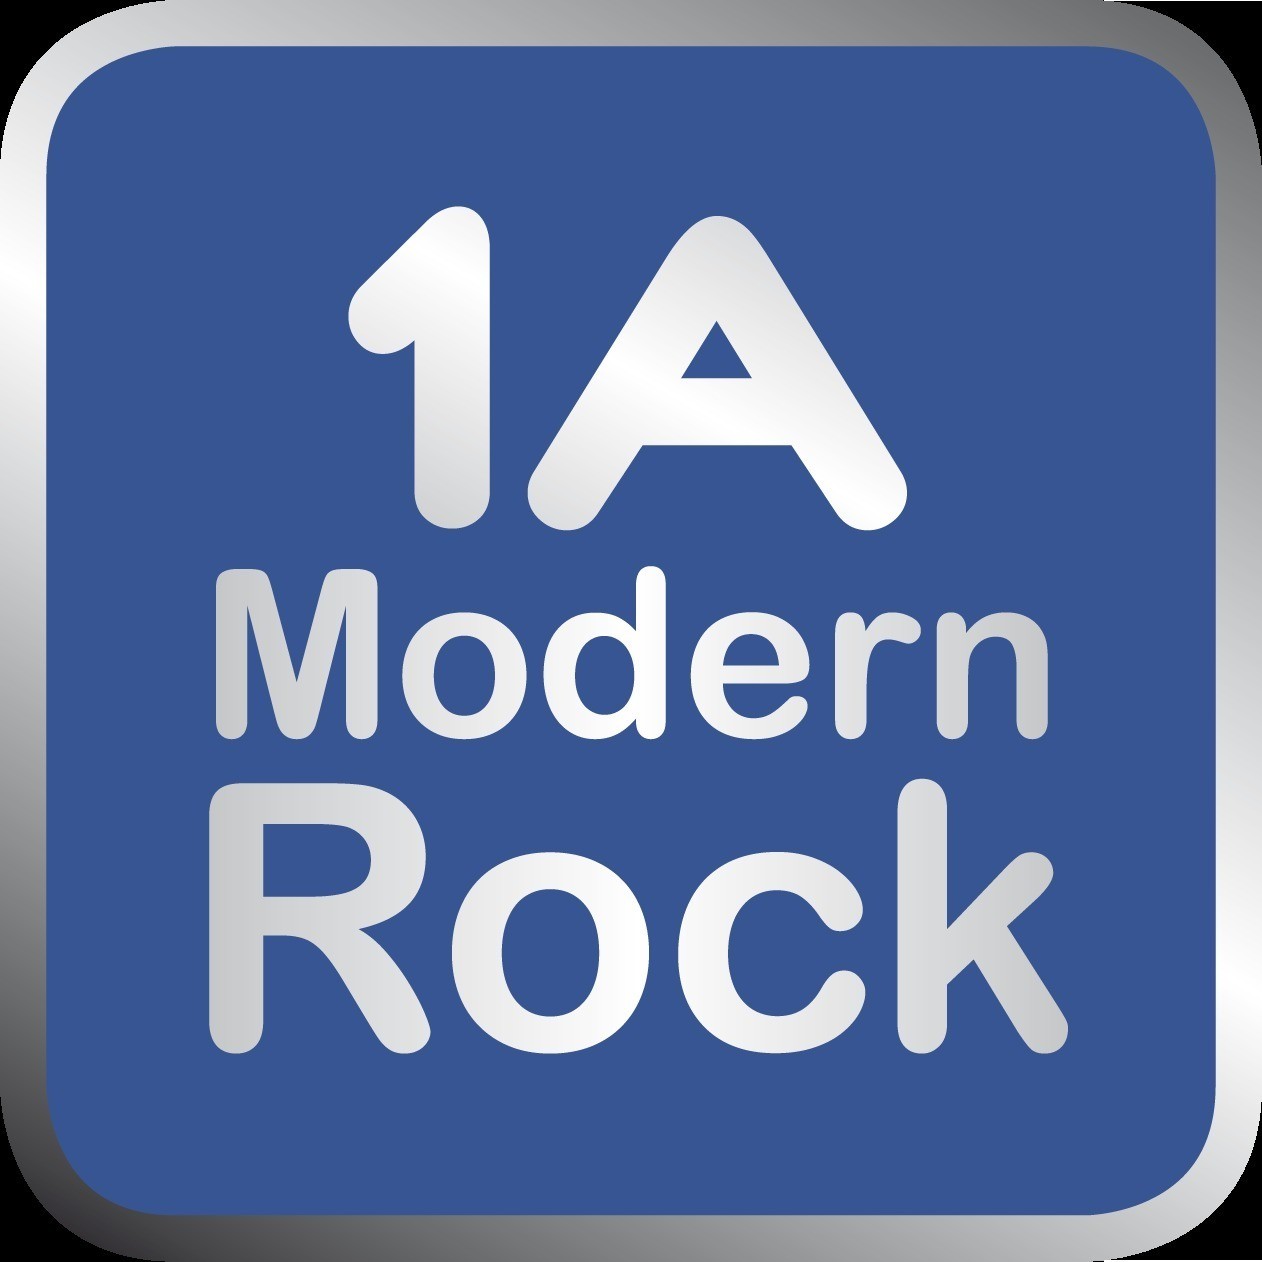 Profil 1A Modern Rock Canal Tv